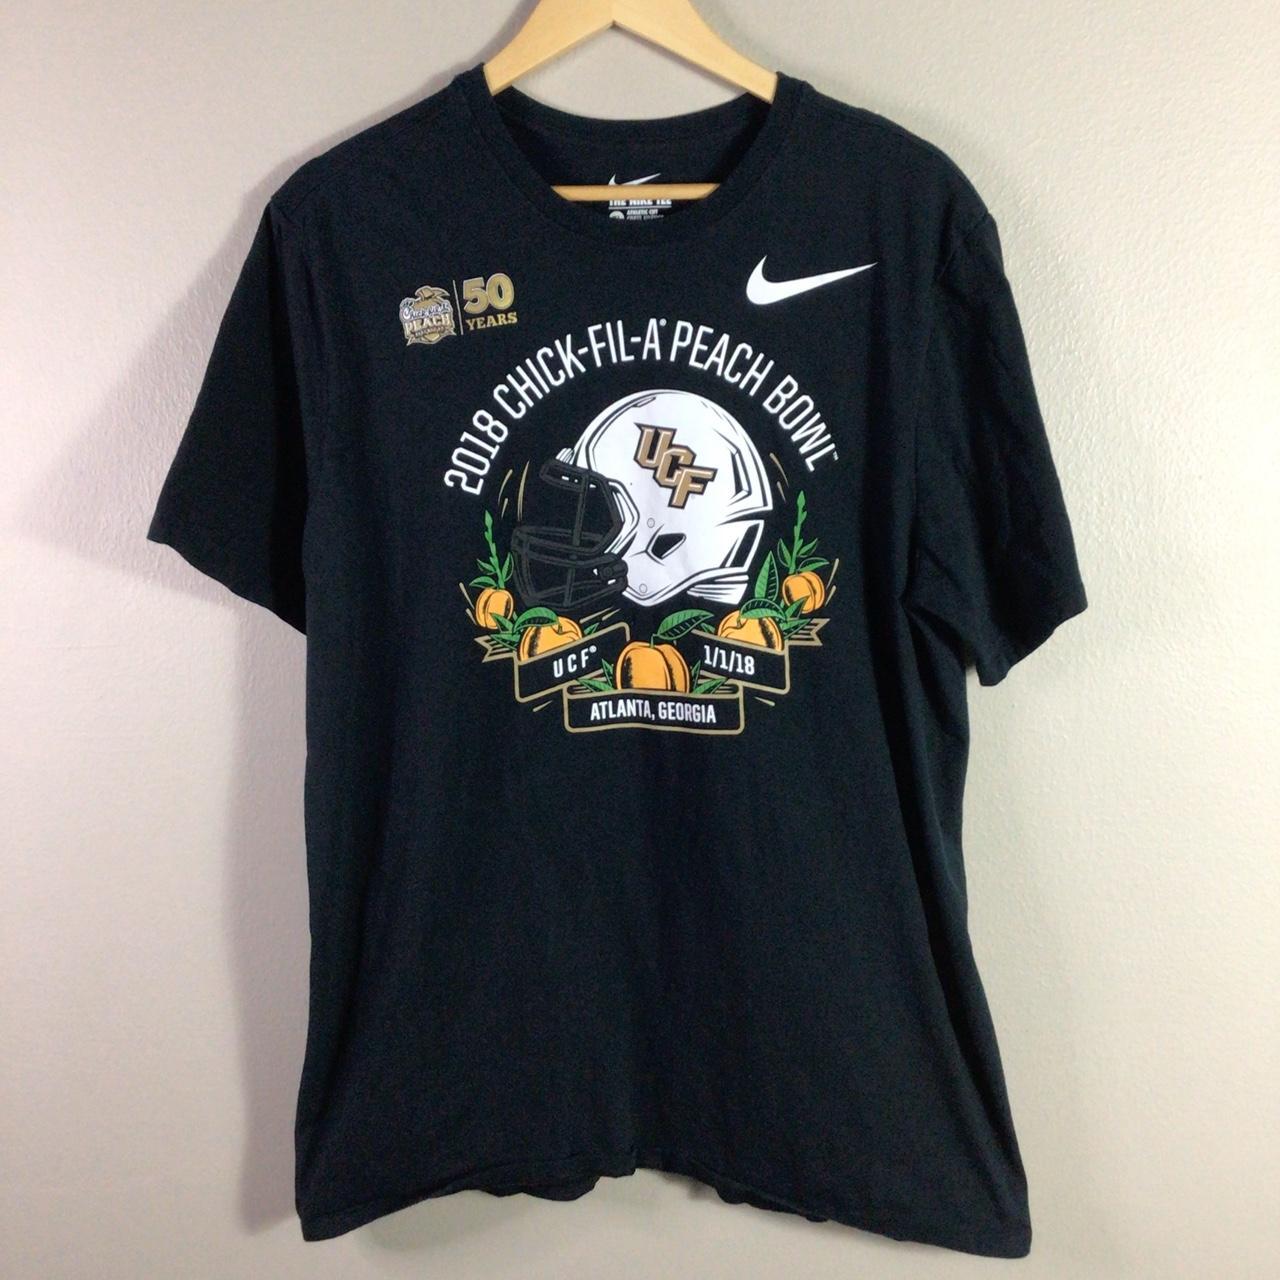 Nike Chic-fil-A Peach 50 Years Bowl T Shirt... - Depop